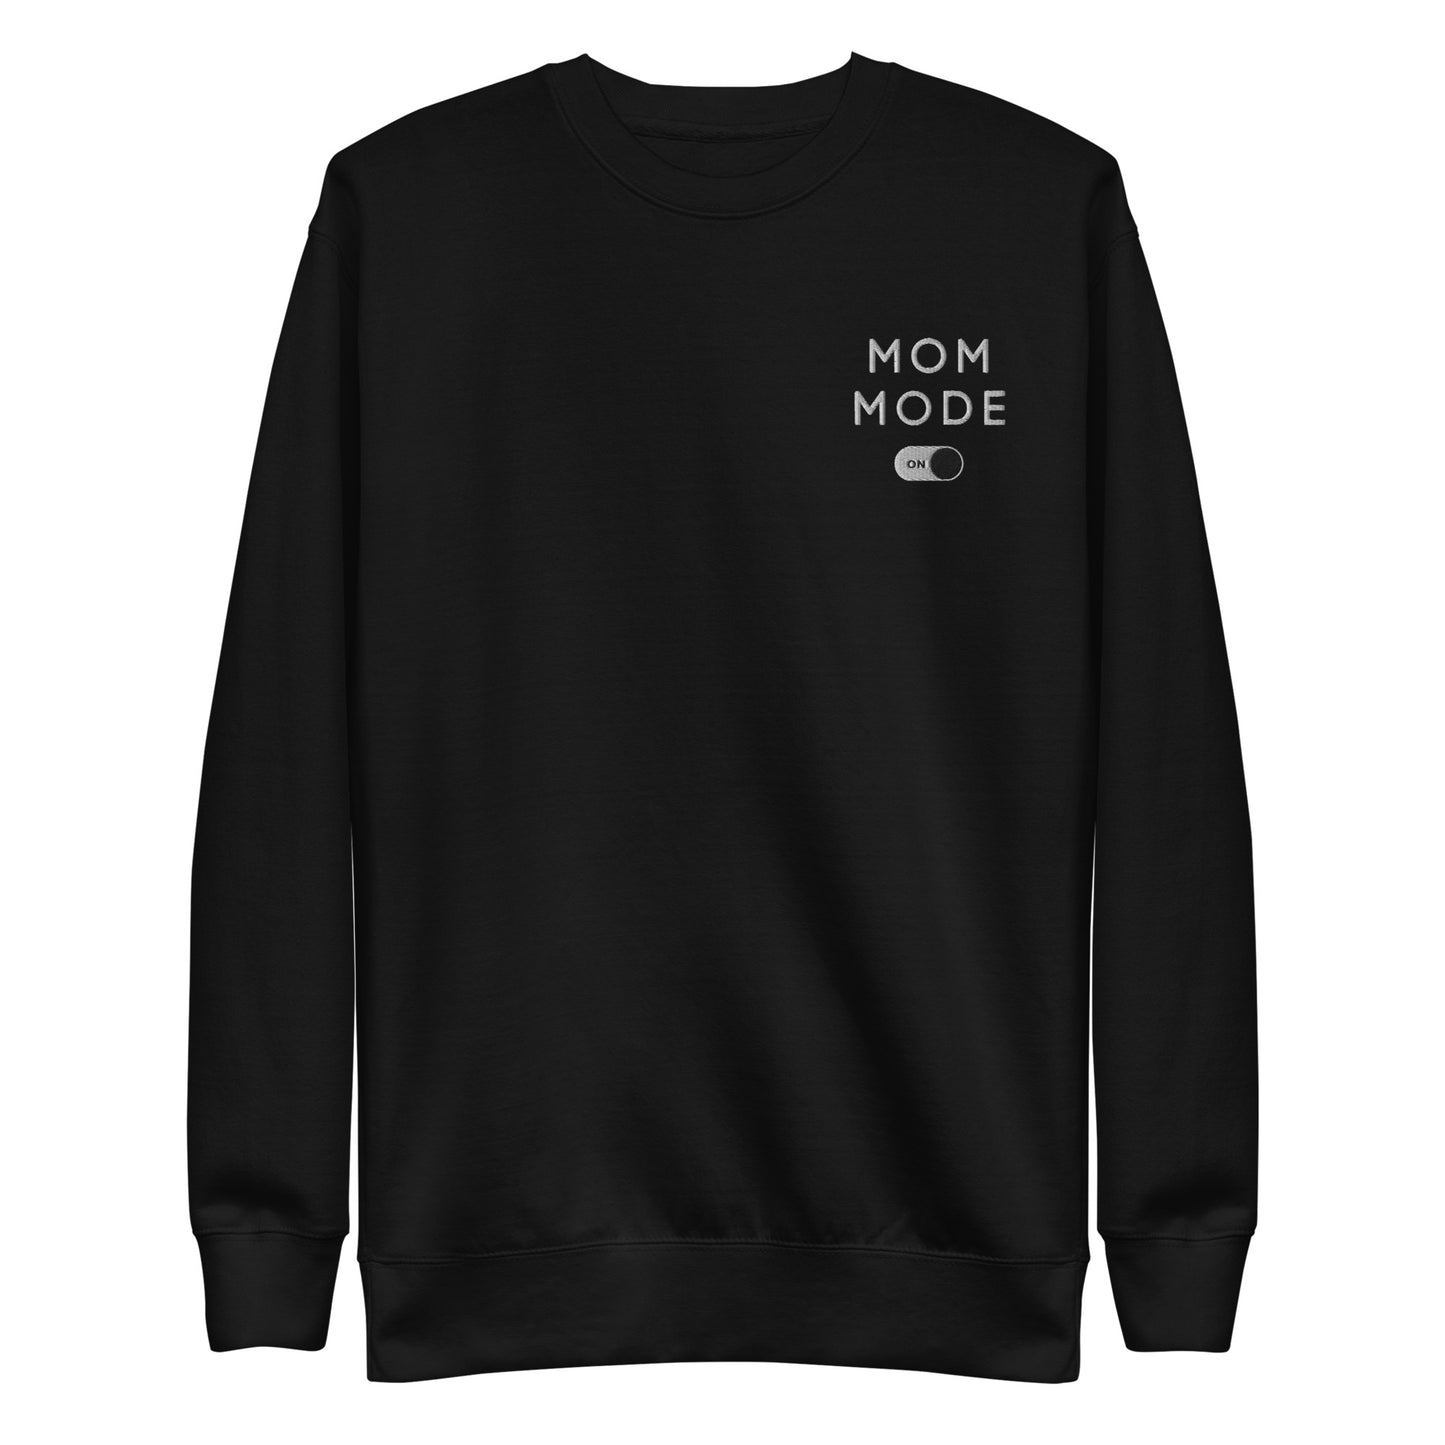 Mom Mode Embroidered Sweatshirt Black